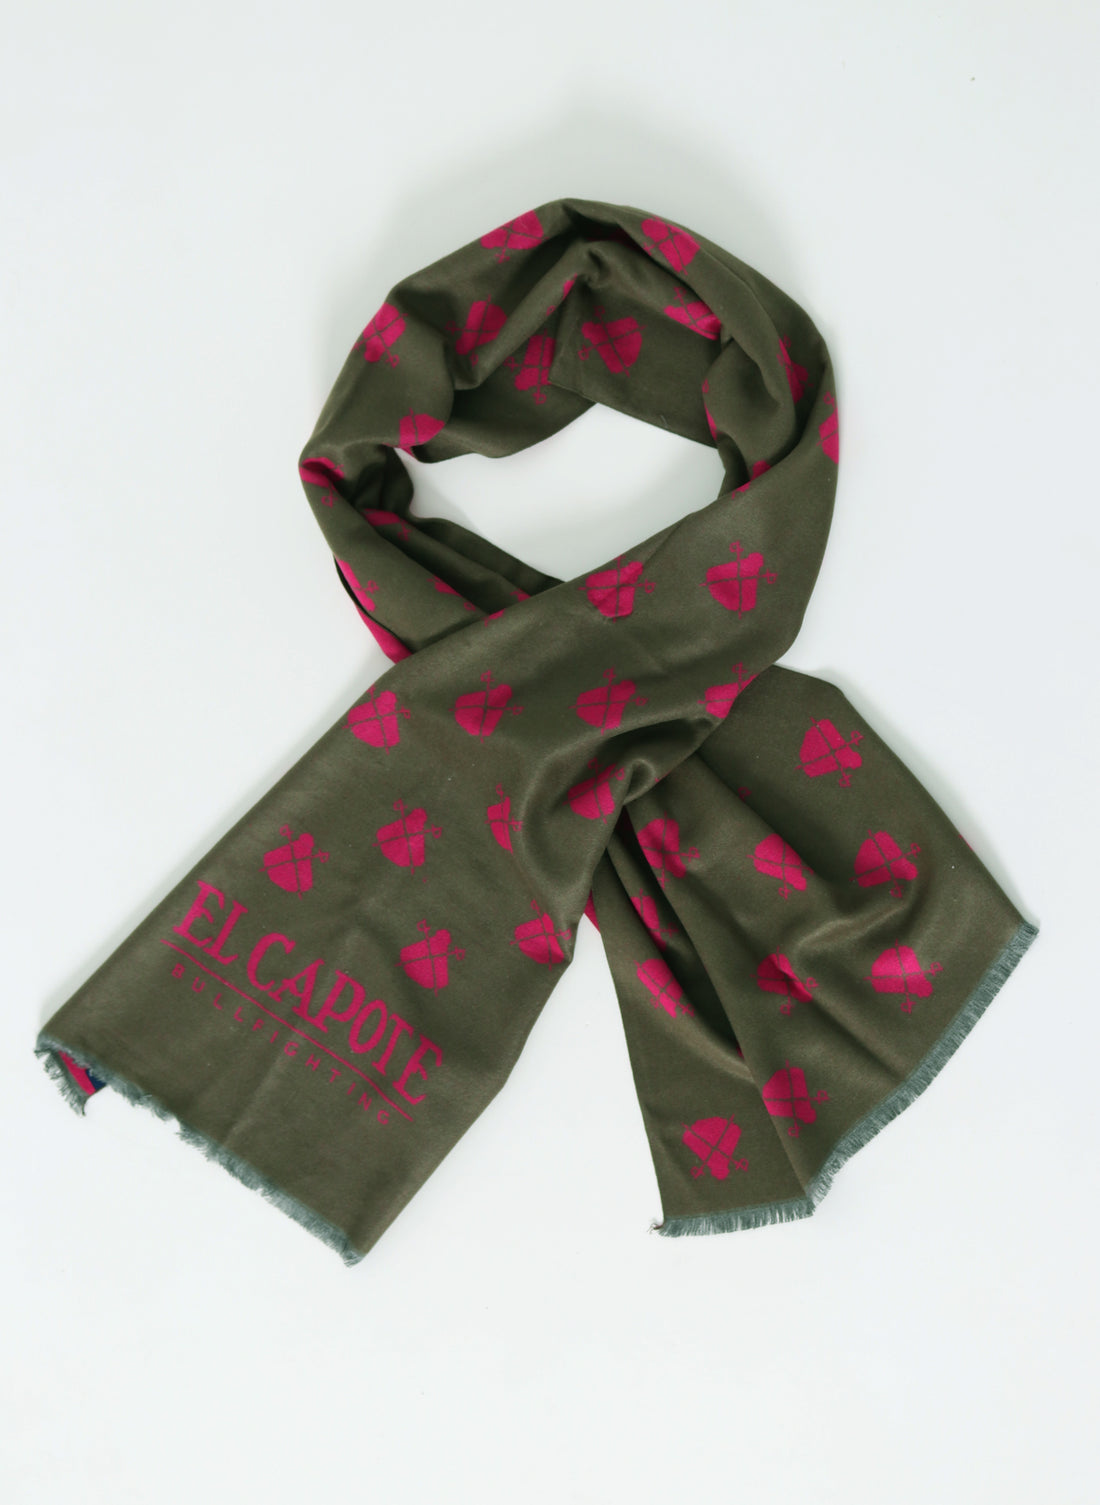 Khakigrüner Schal mit rosafarbenem Capote-Print